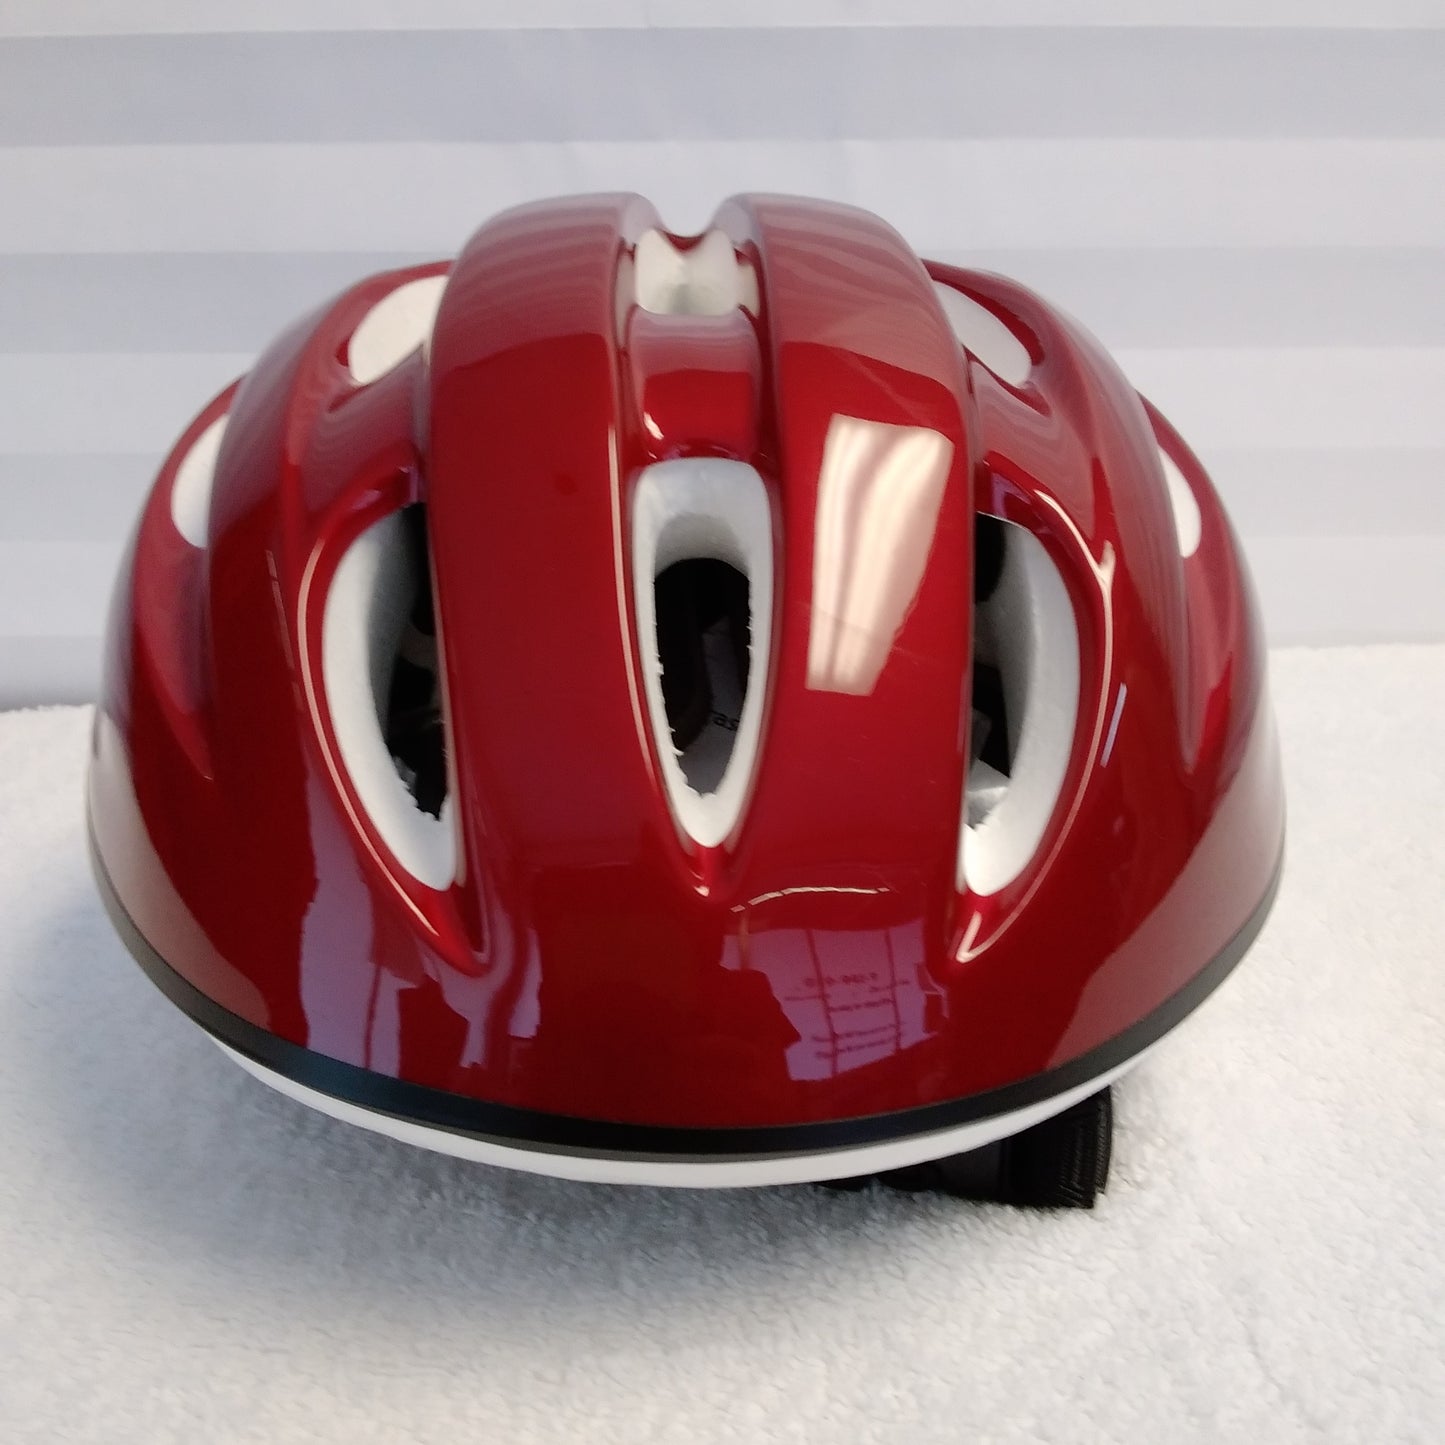 NEW - Helmets R Us Red Bicycle Helmet - Size: L (58-62cm)